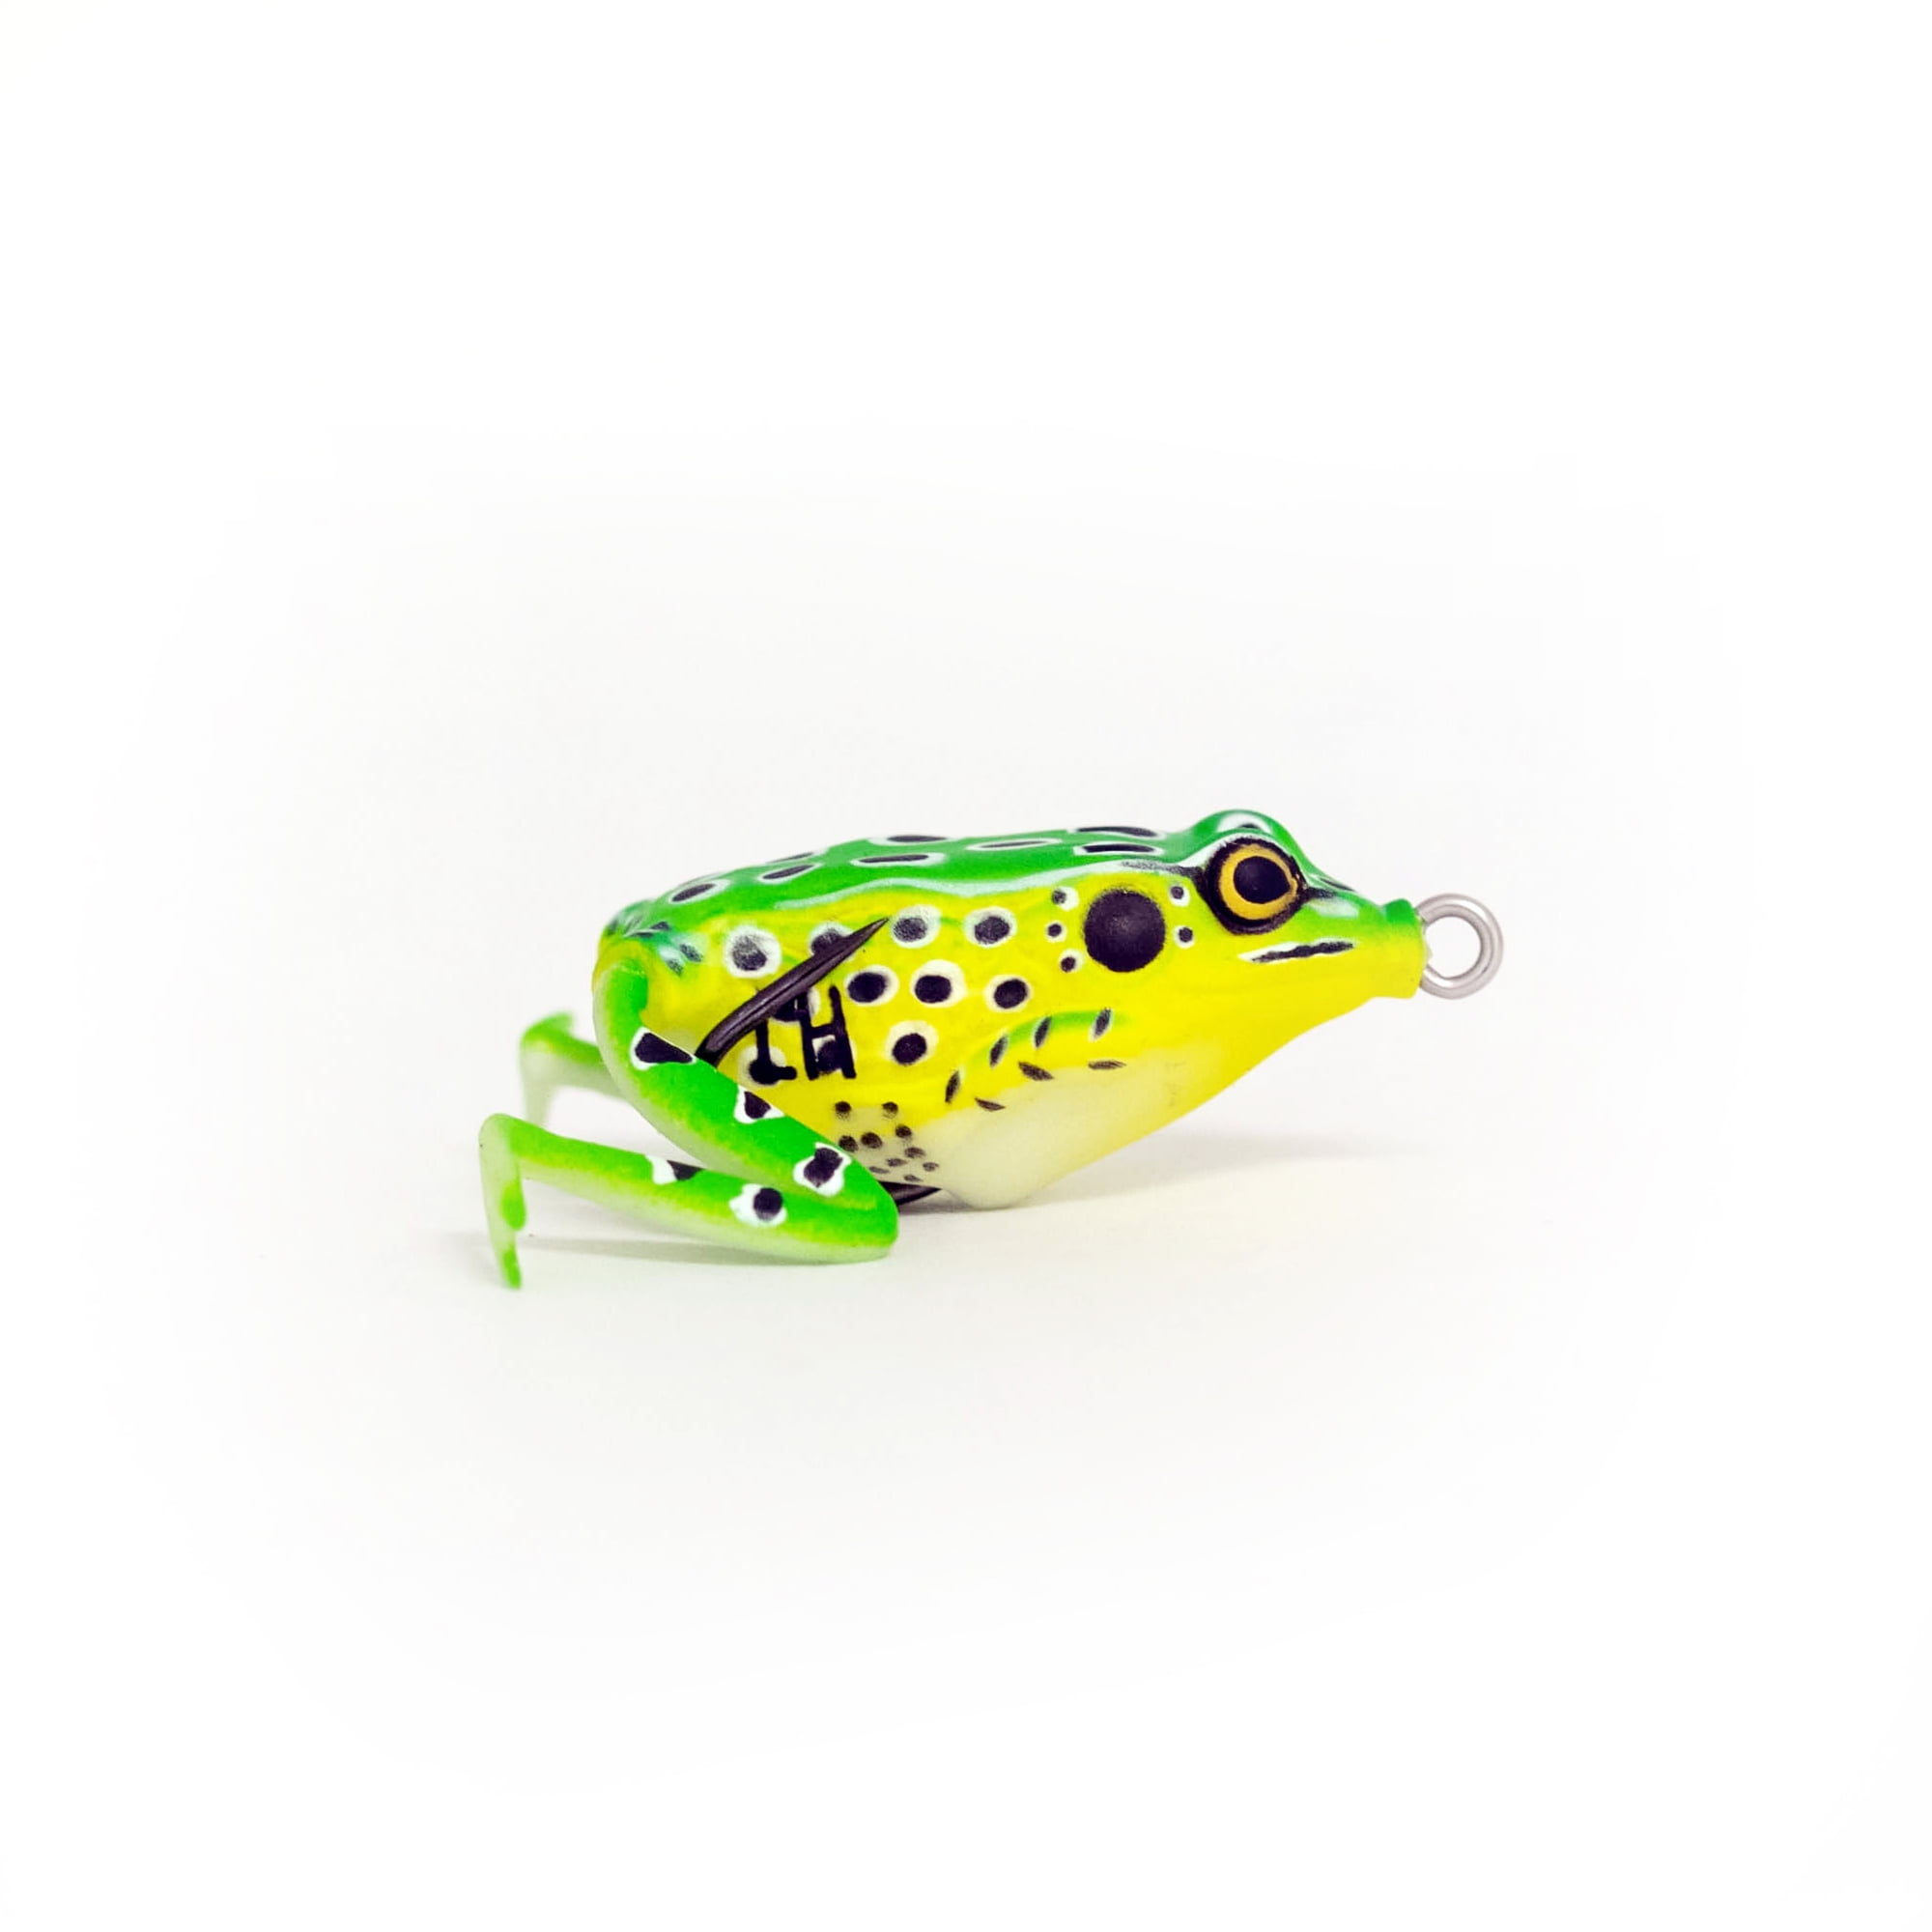 Lunkerhunt Pocket Frog - Topwater Lure - Leopard,1.75in,1/4oz,Soft